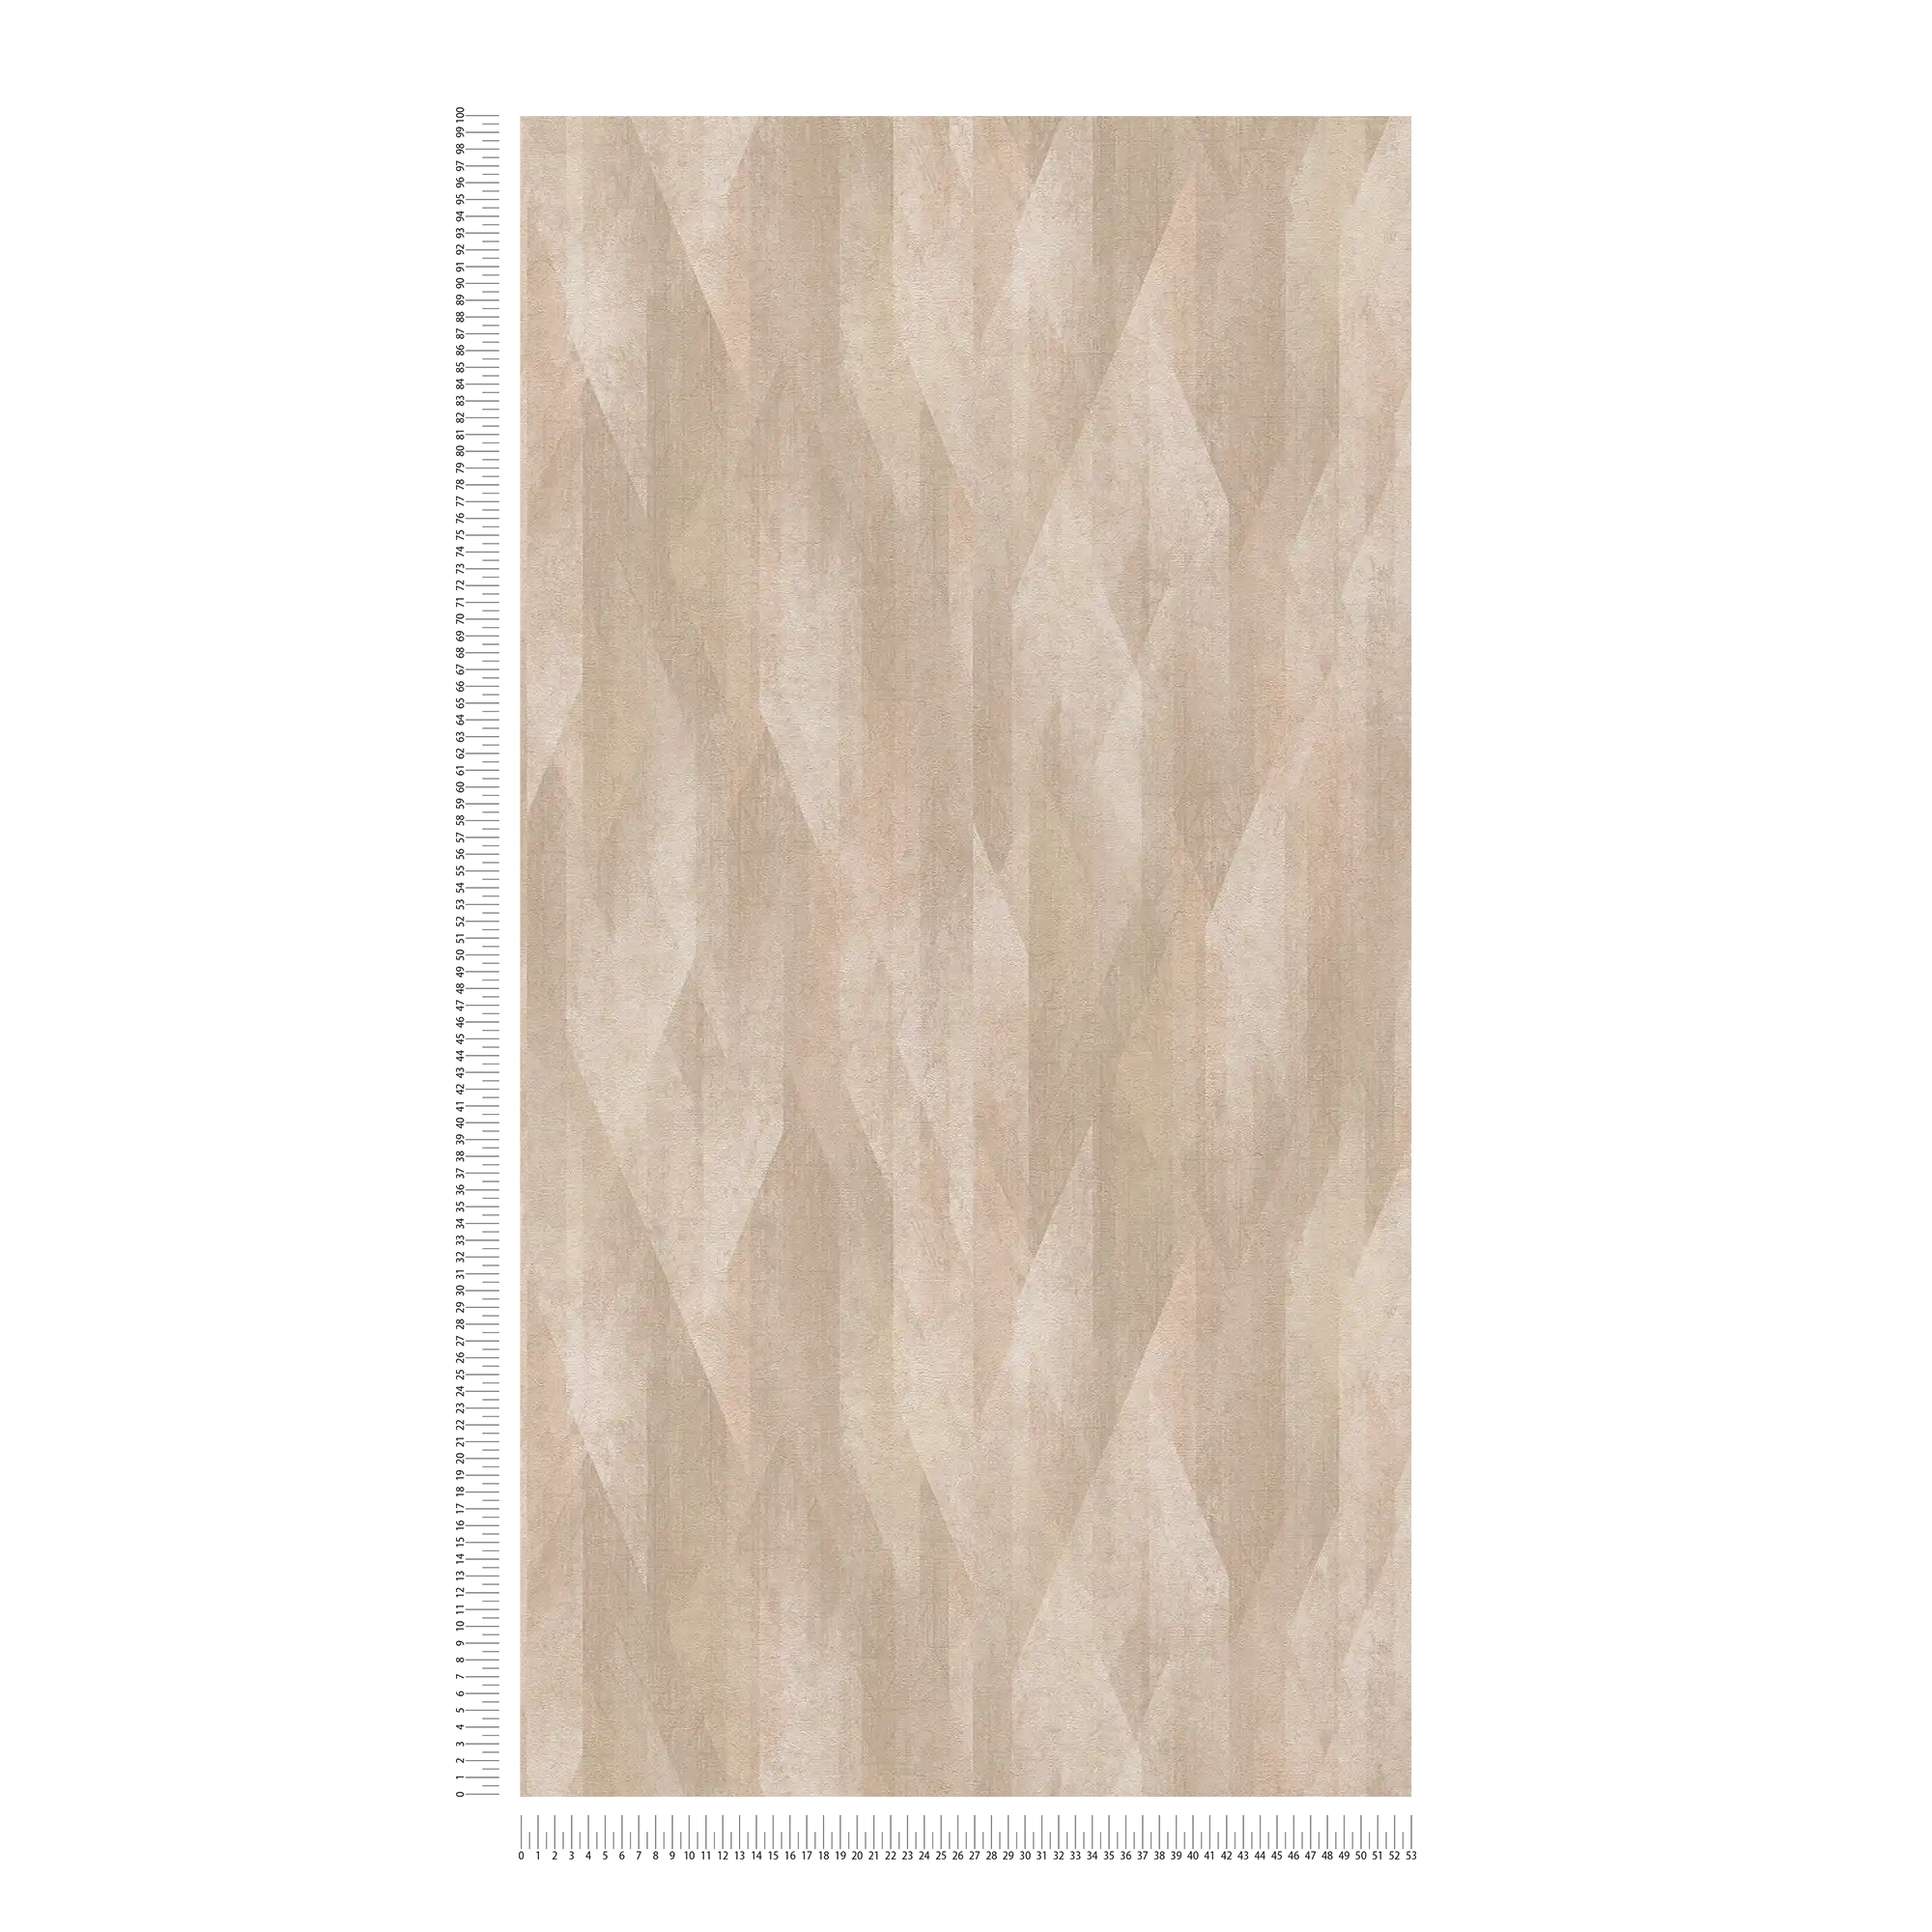             Non-woven wallpaper with graphic diamond design - beige, brown
        